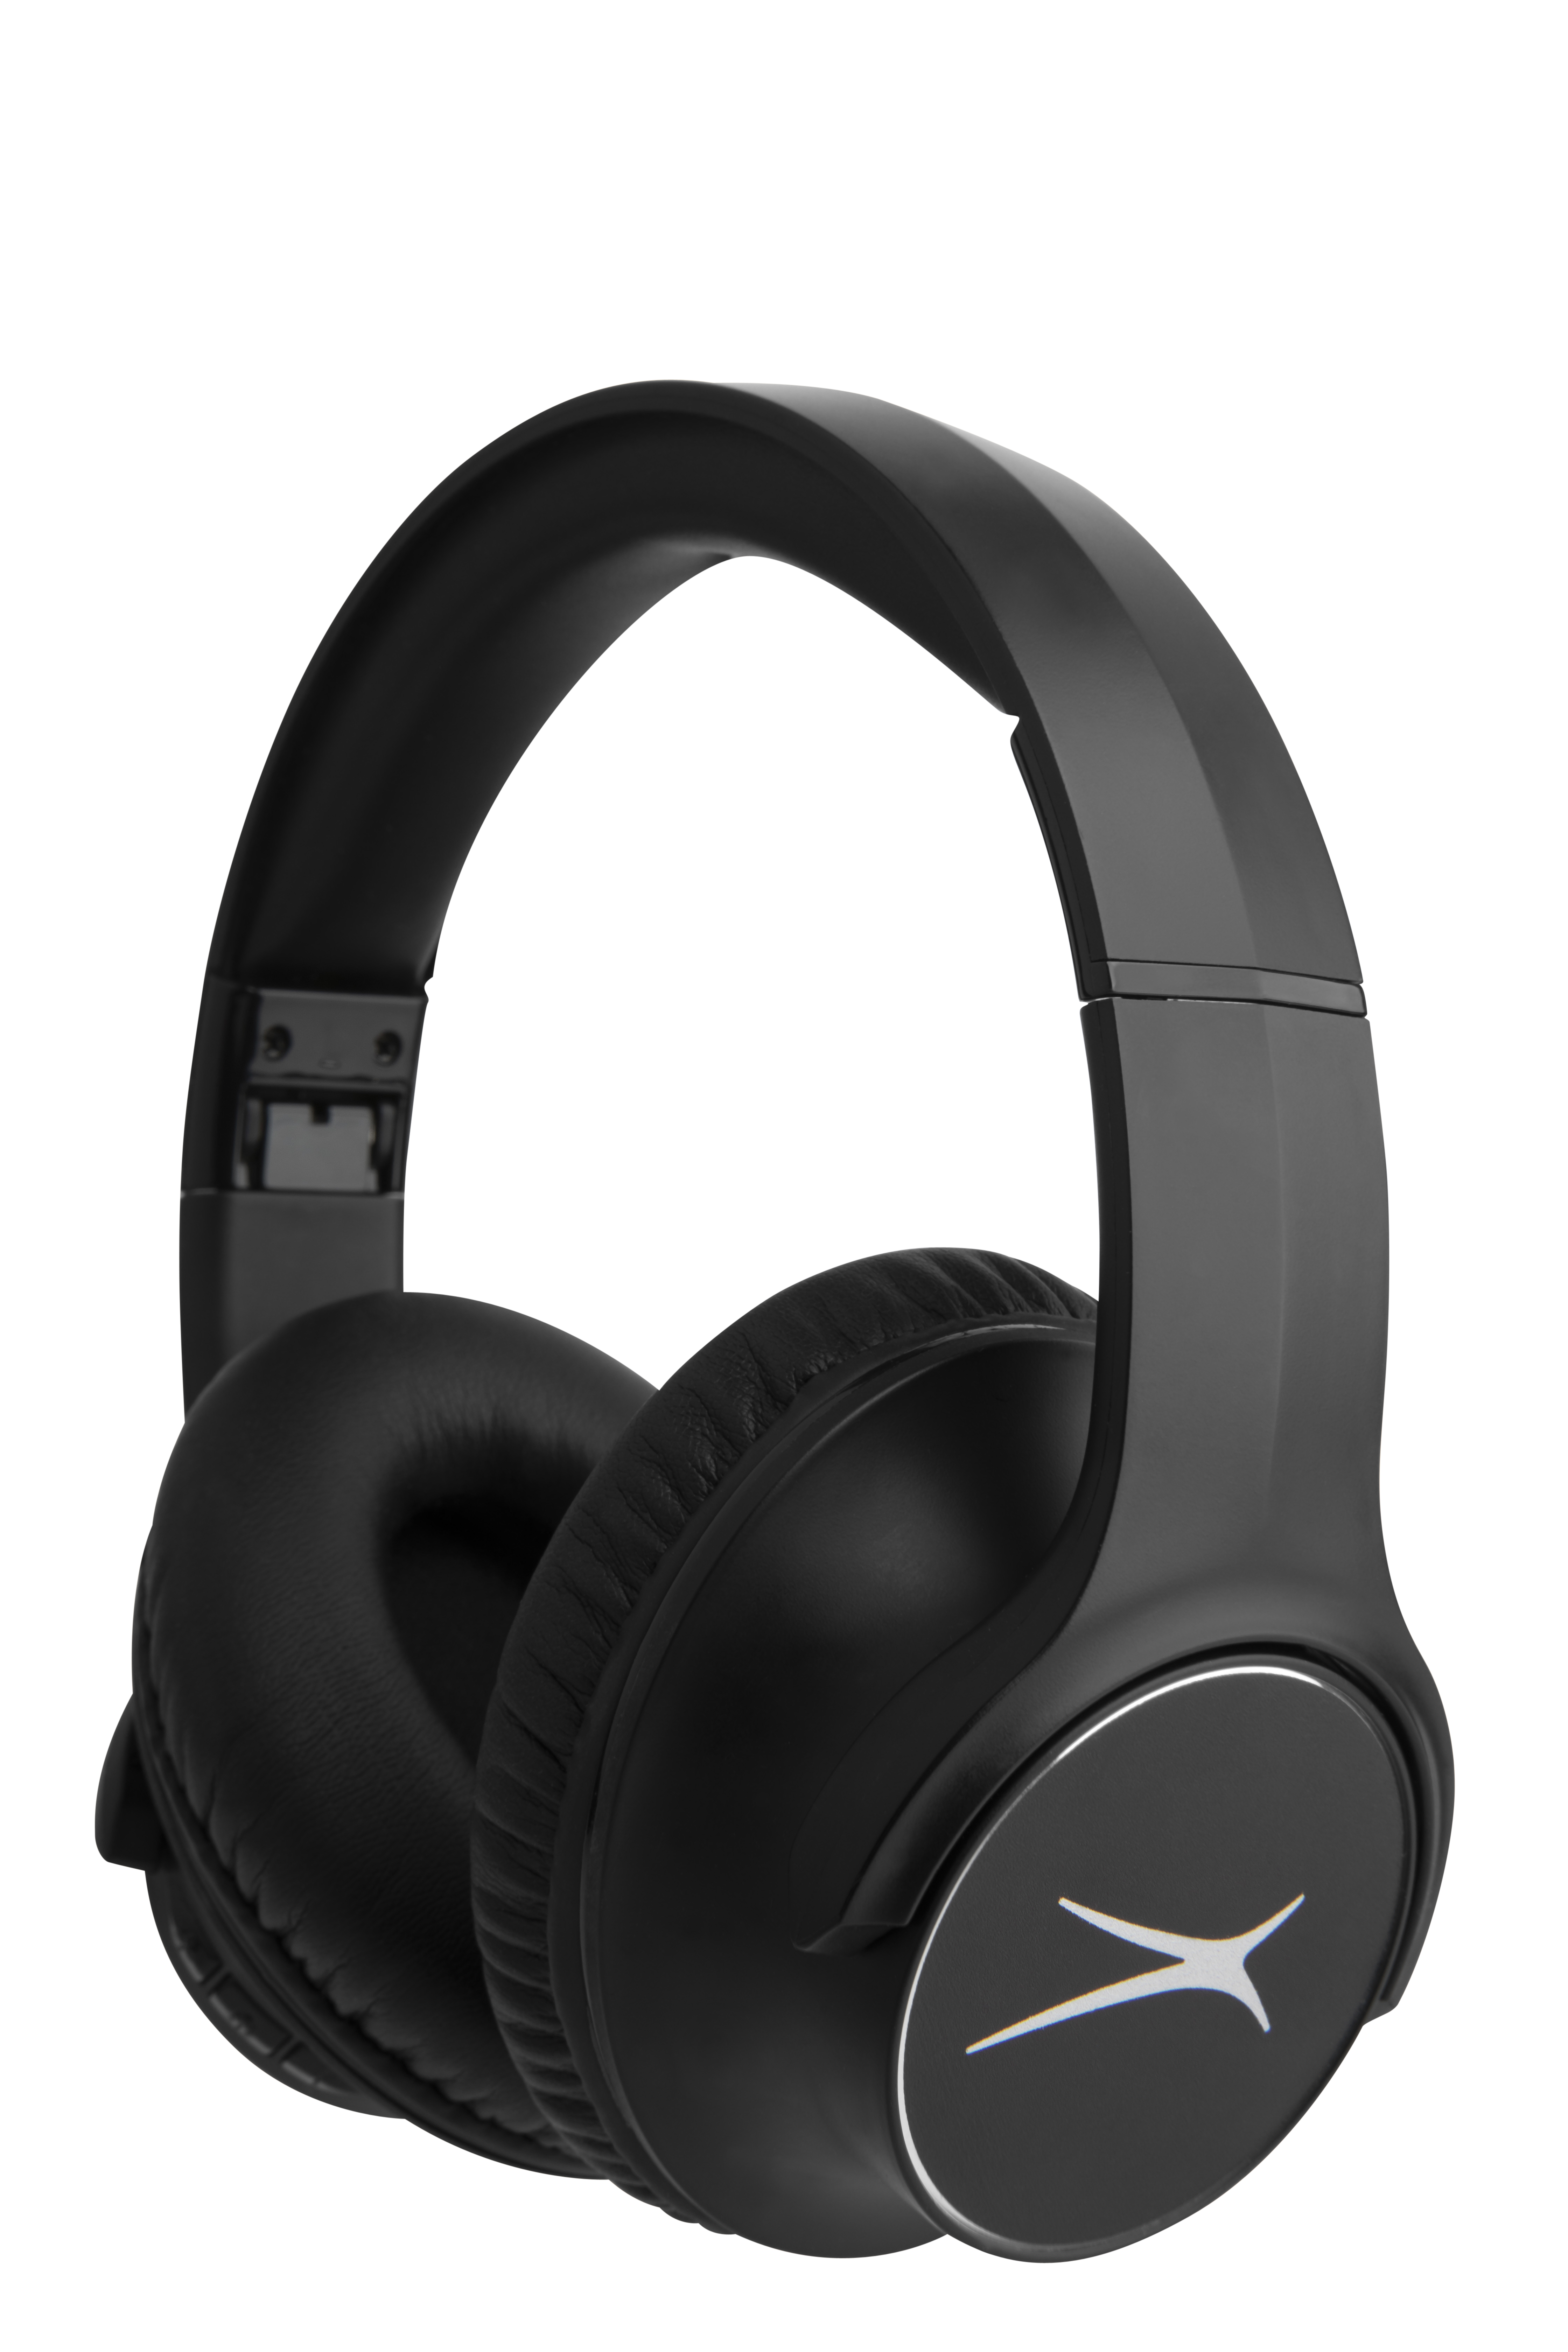 Altec Lansing R3volution X Bluetooth On-Ear Headphones, Noise-Canceling, Black, MZX009-BLK - image 1 of 5